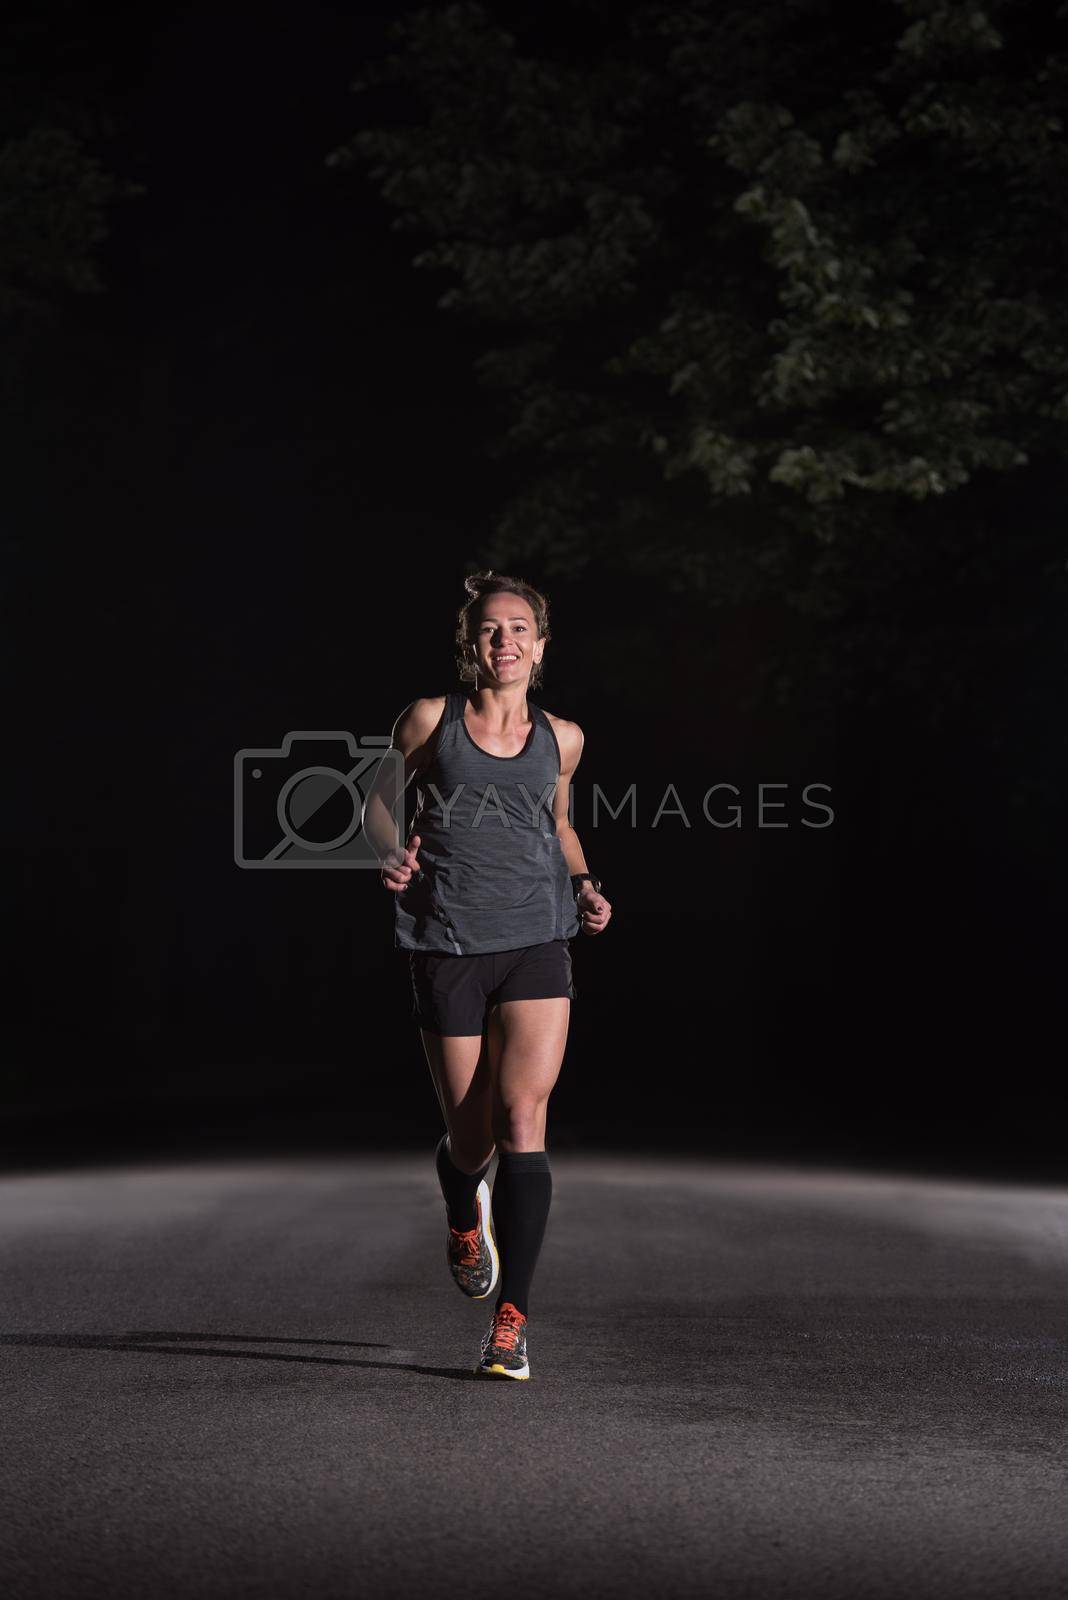 Royalty free image of female runner training for marathon by dotshock